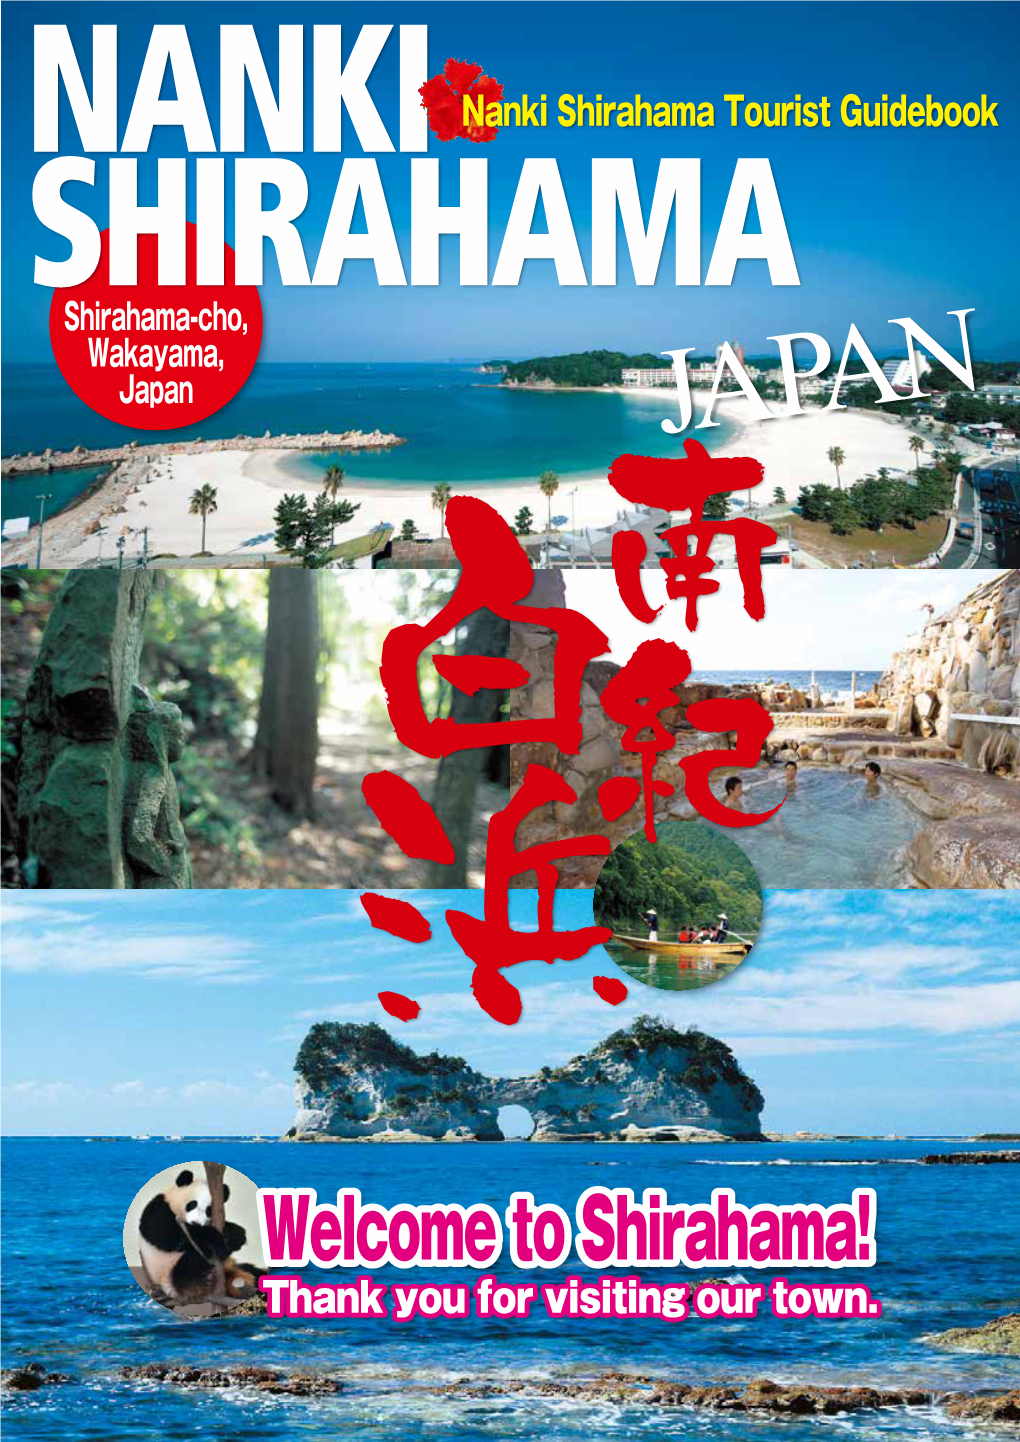 Welcome to Shirahama!